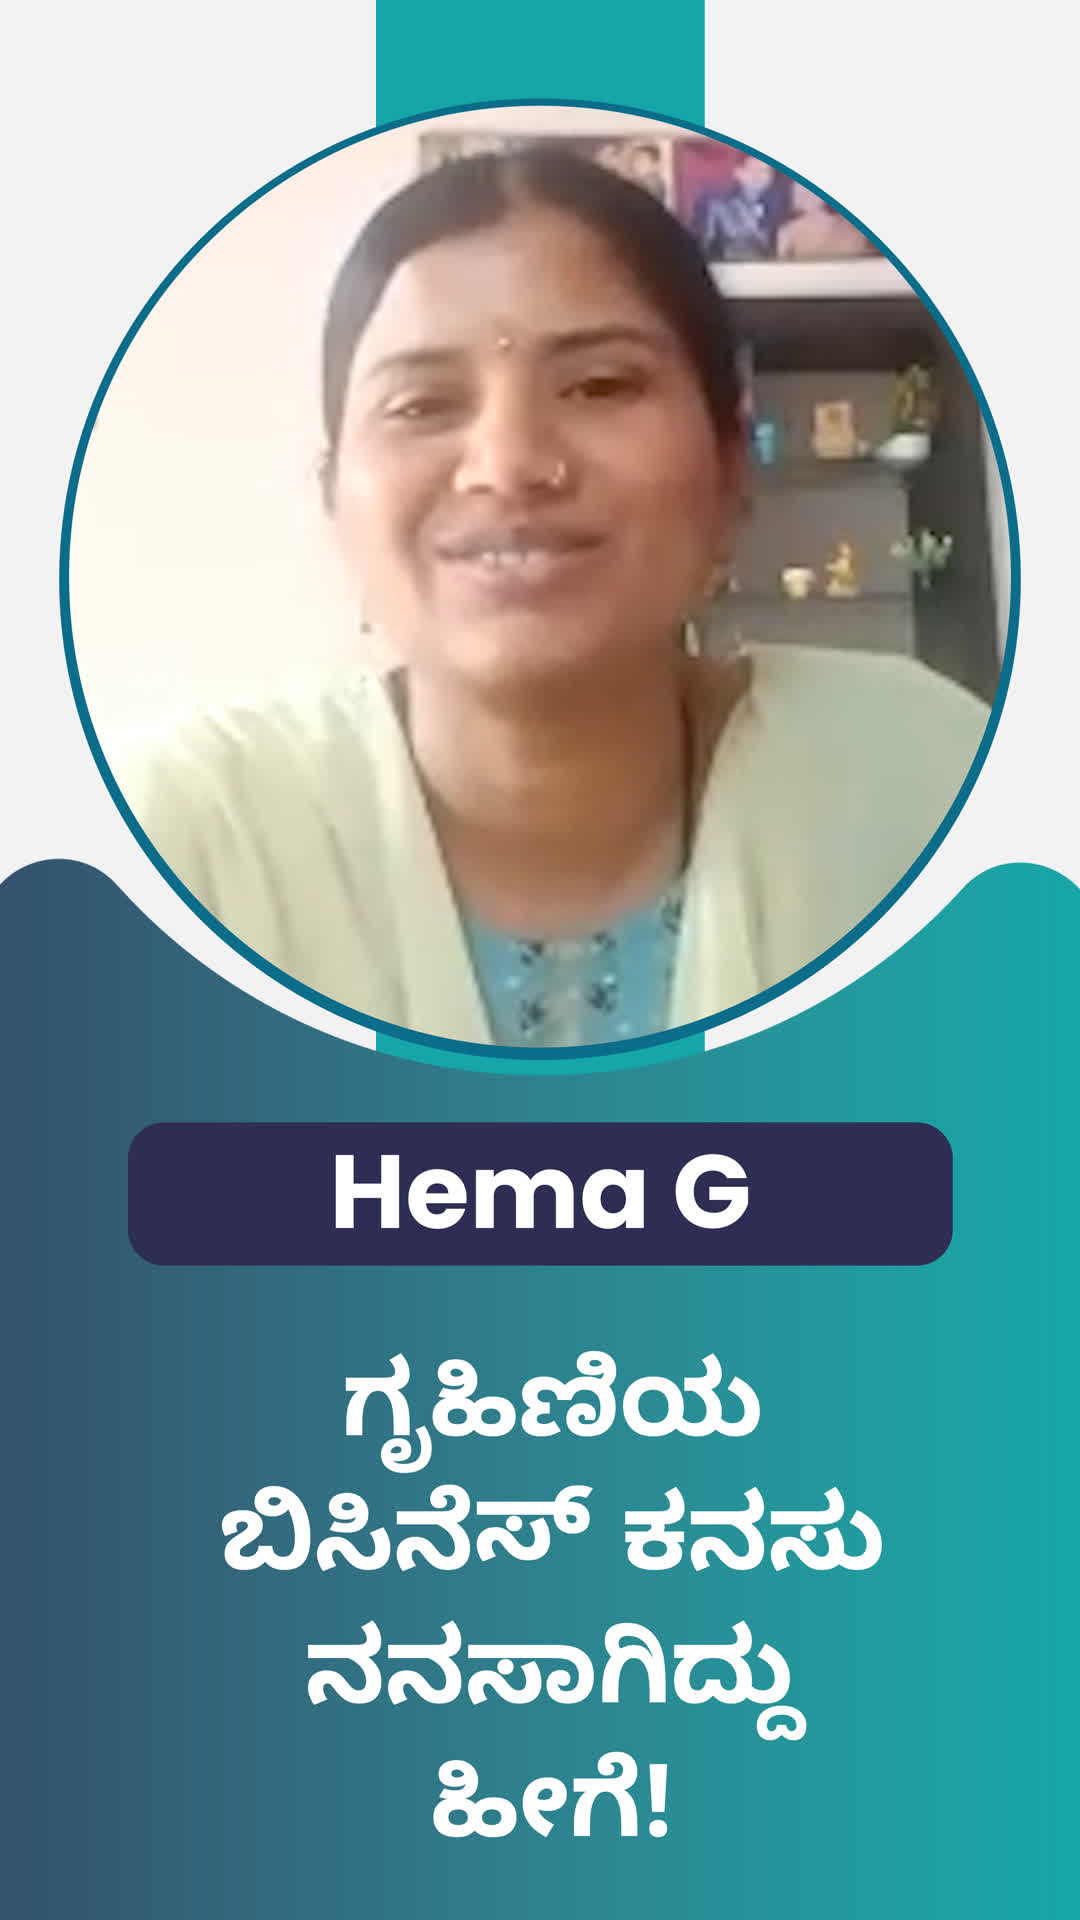 hema g's Honest Review of ffreedom app - Raichur ,Karnataka